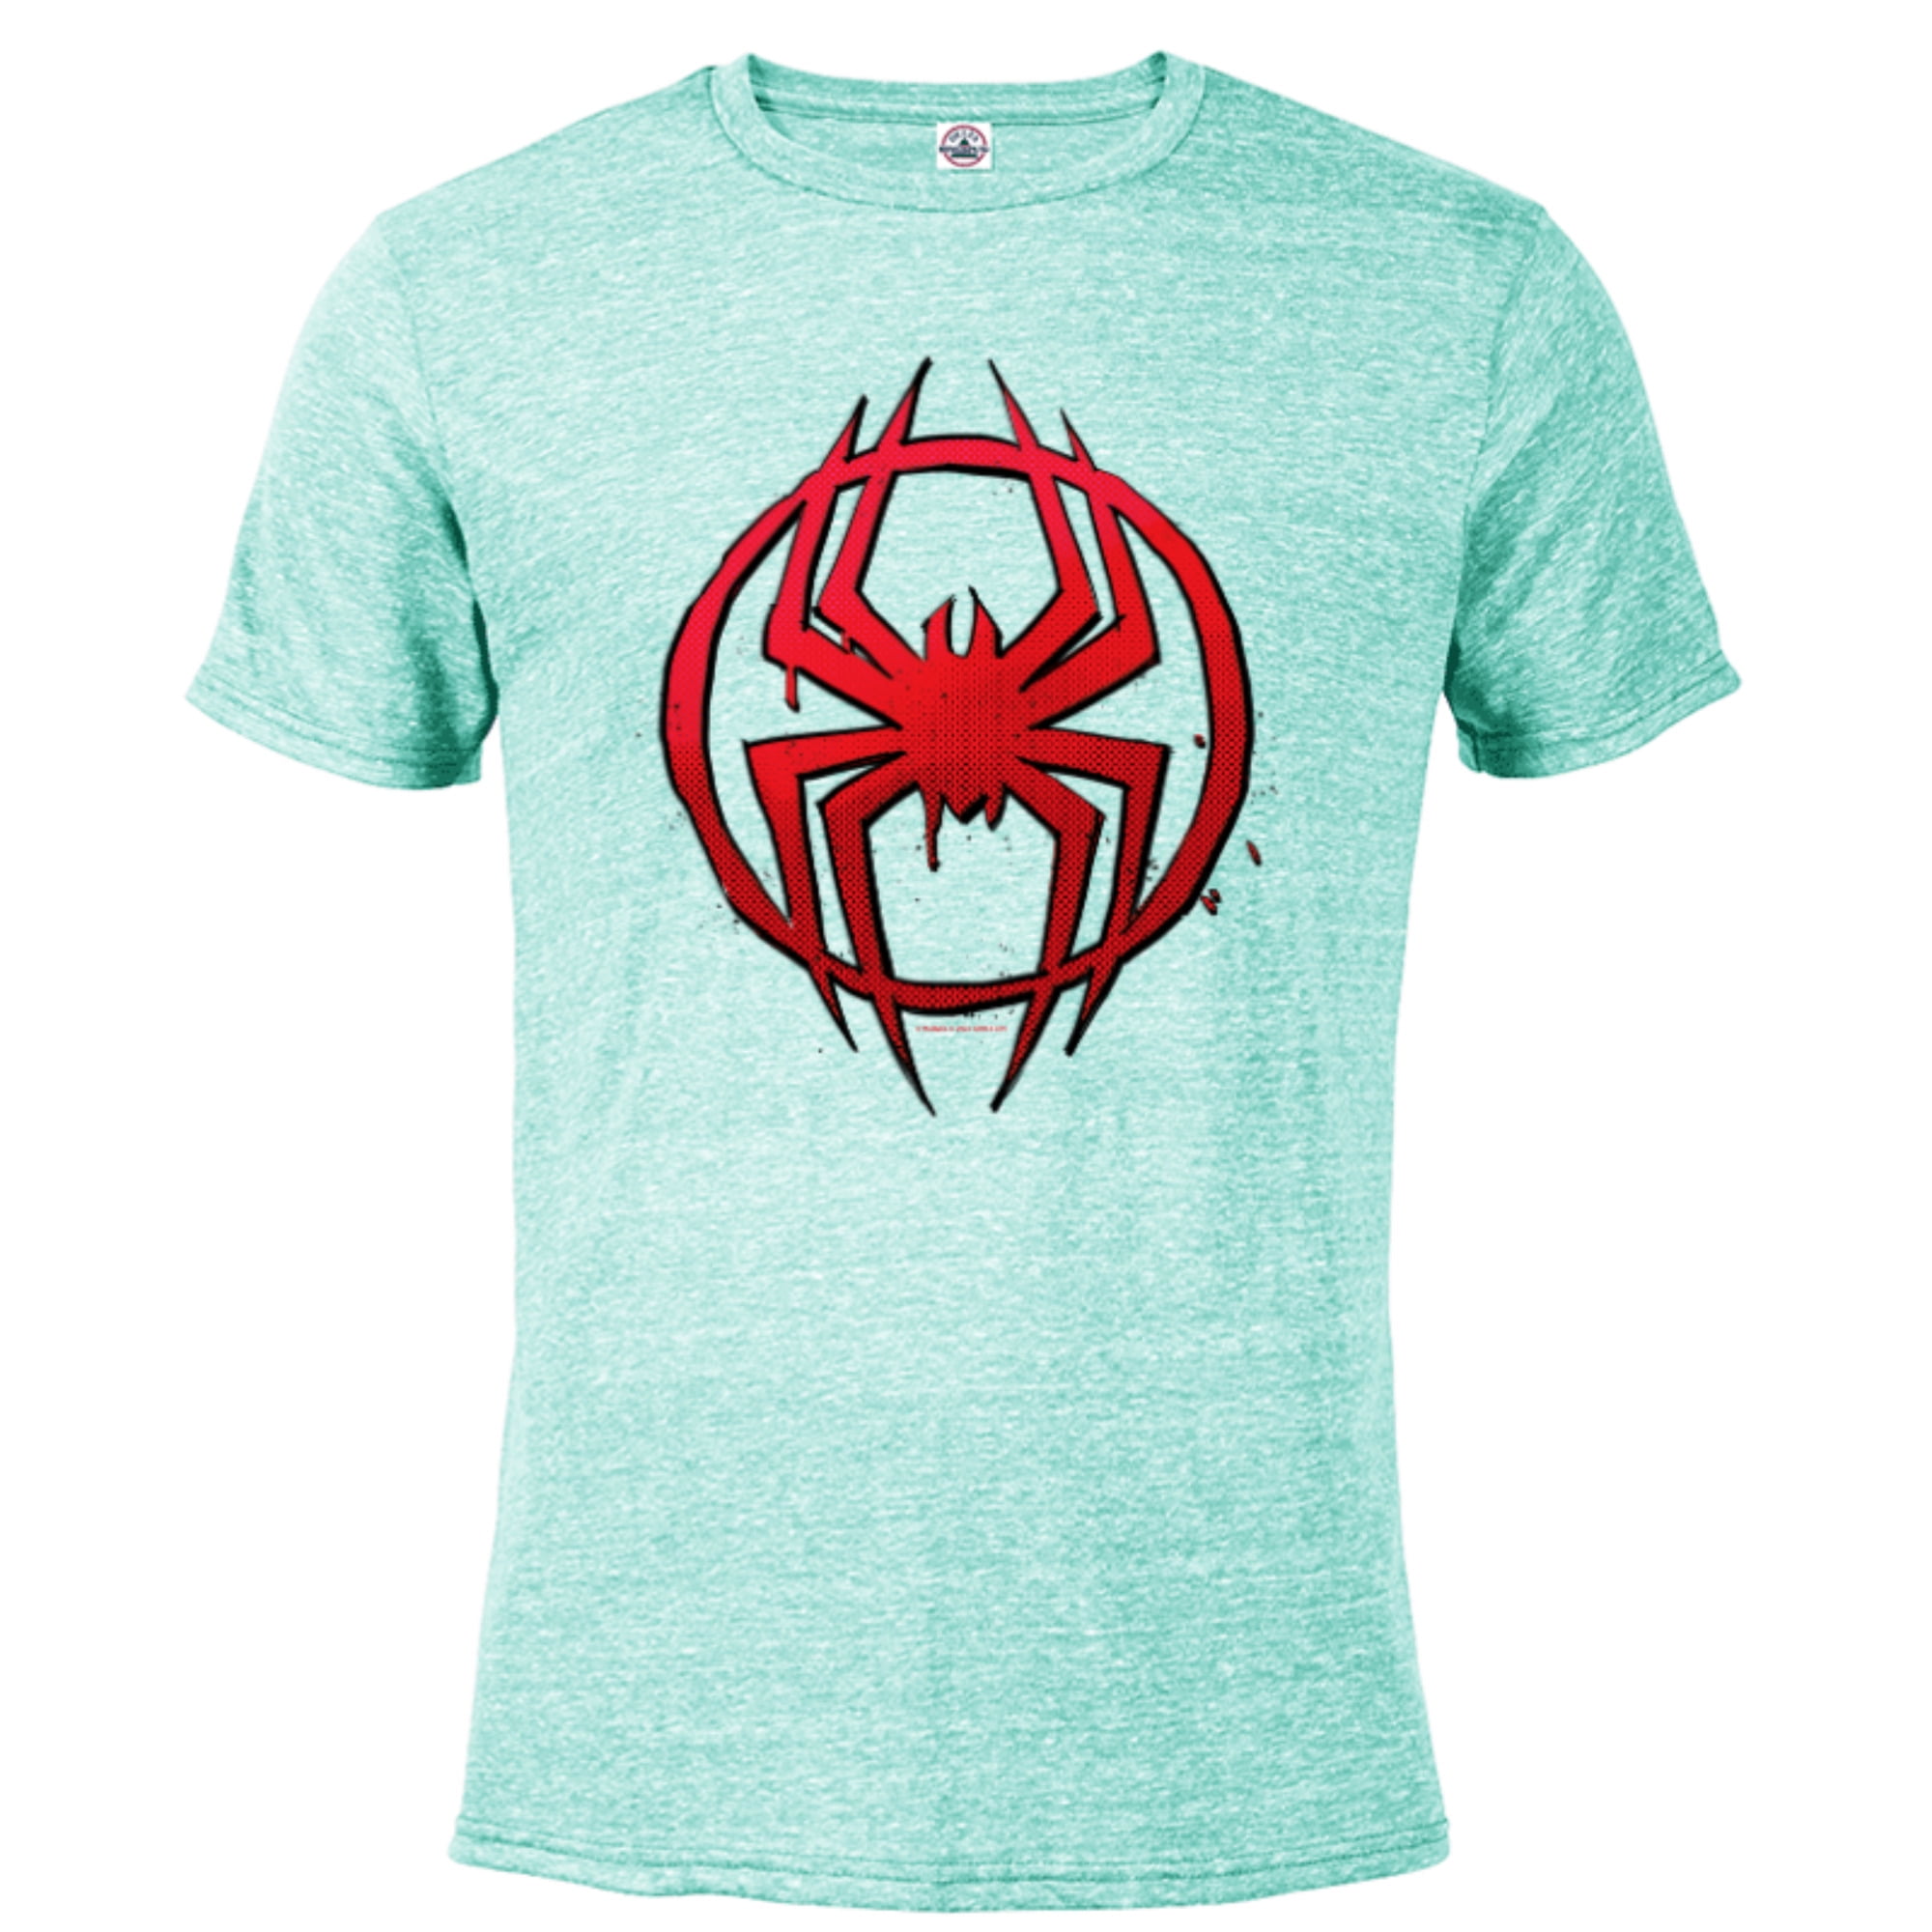 Marvel Amazing Spider-man Graphic Short Sleeve Adult Size T-shirt L Blue